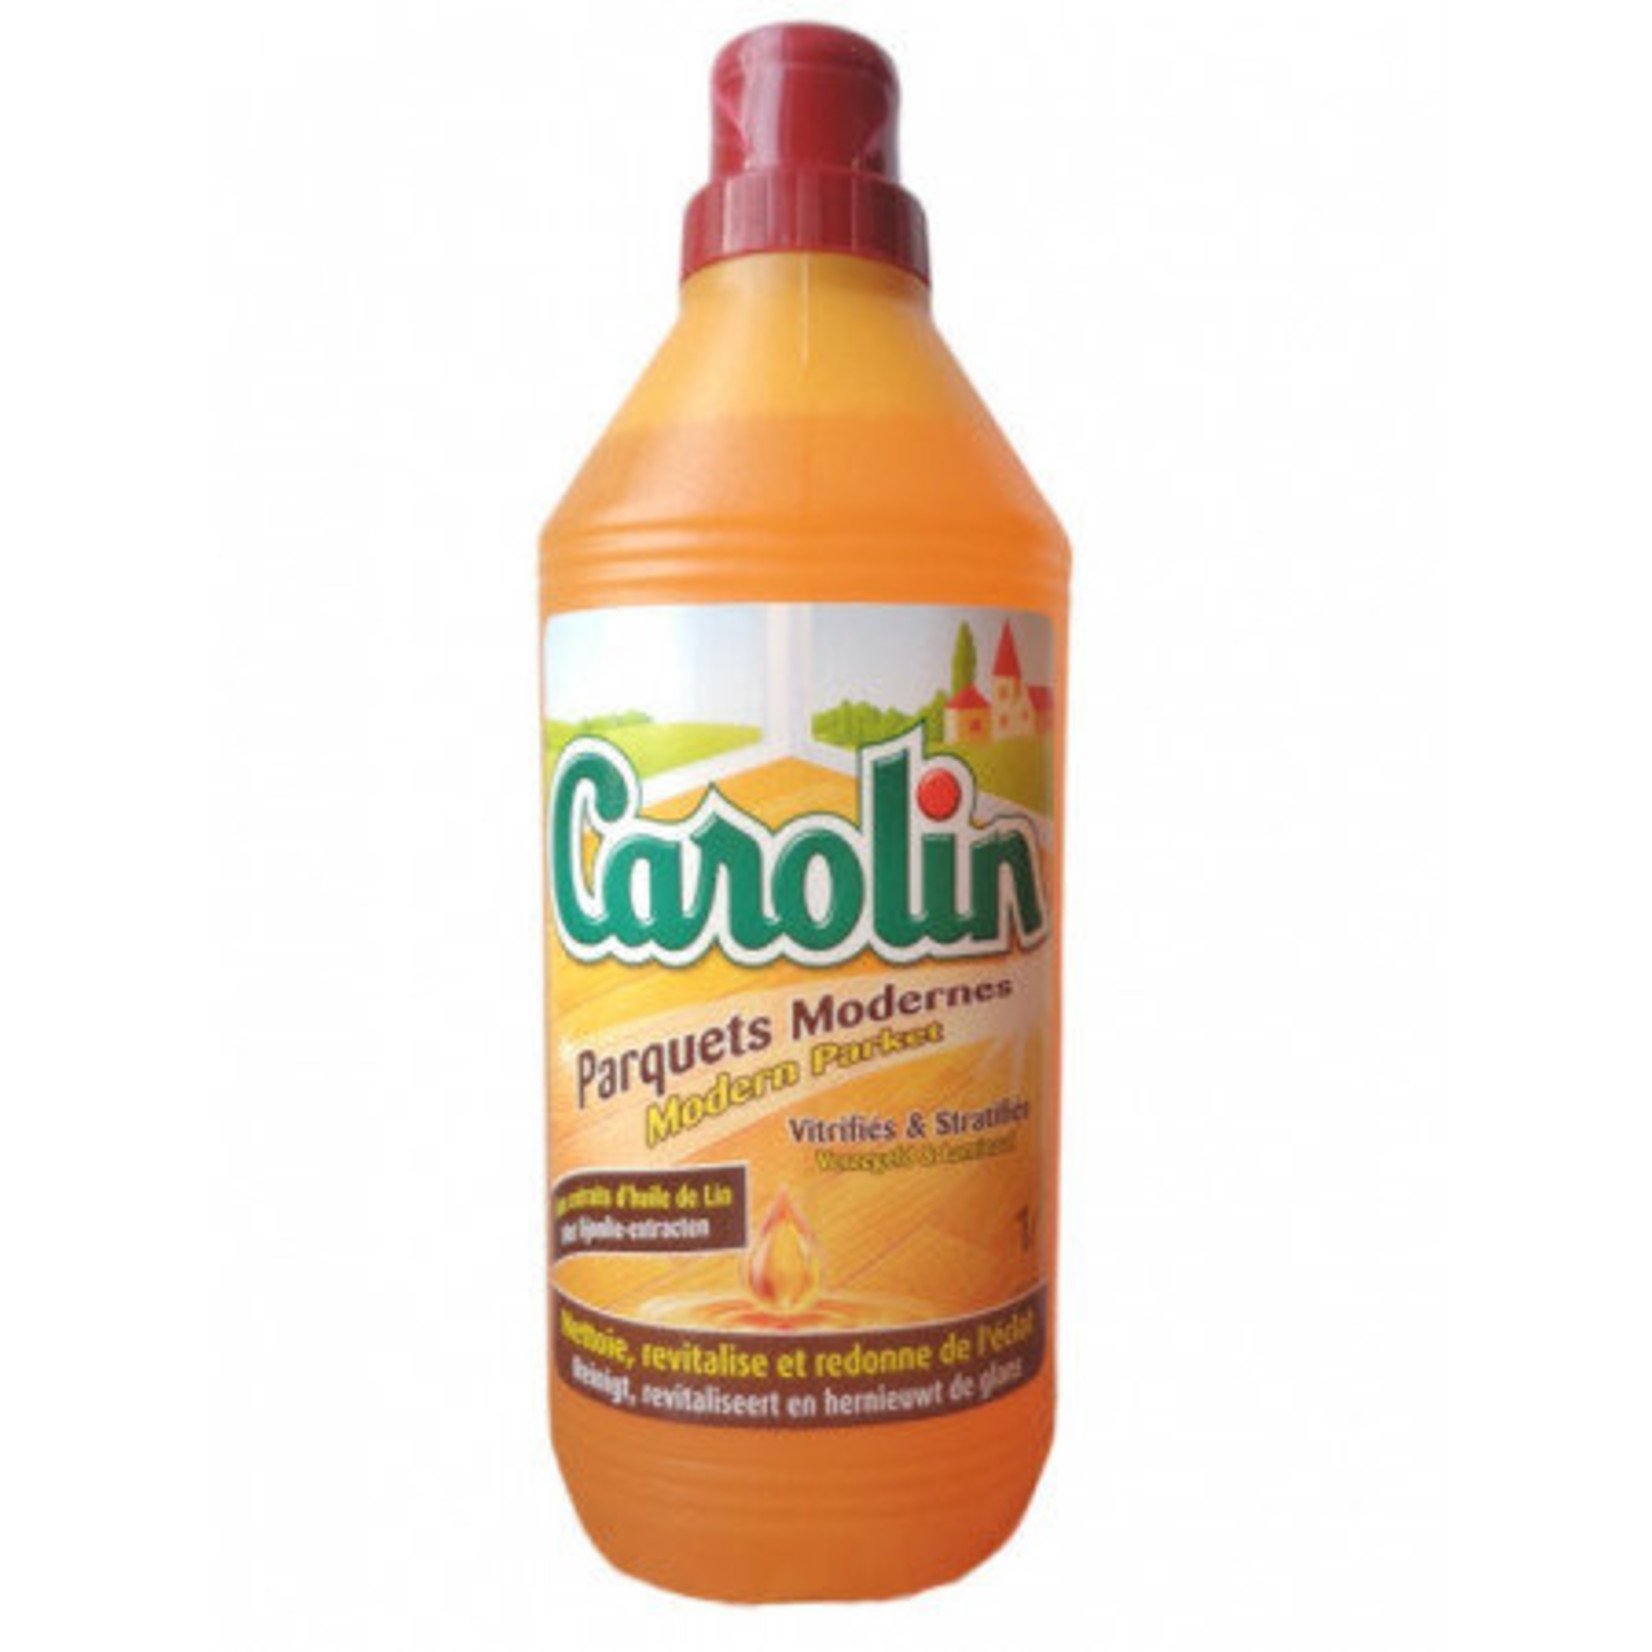 carolin Carolin 1L vloerzeep modern parket